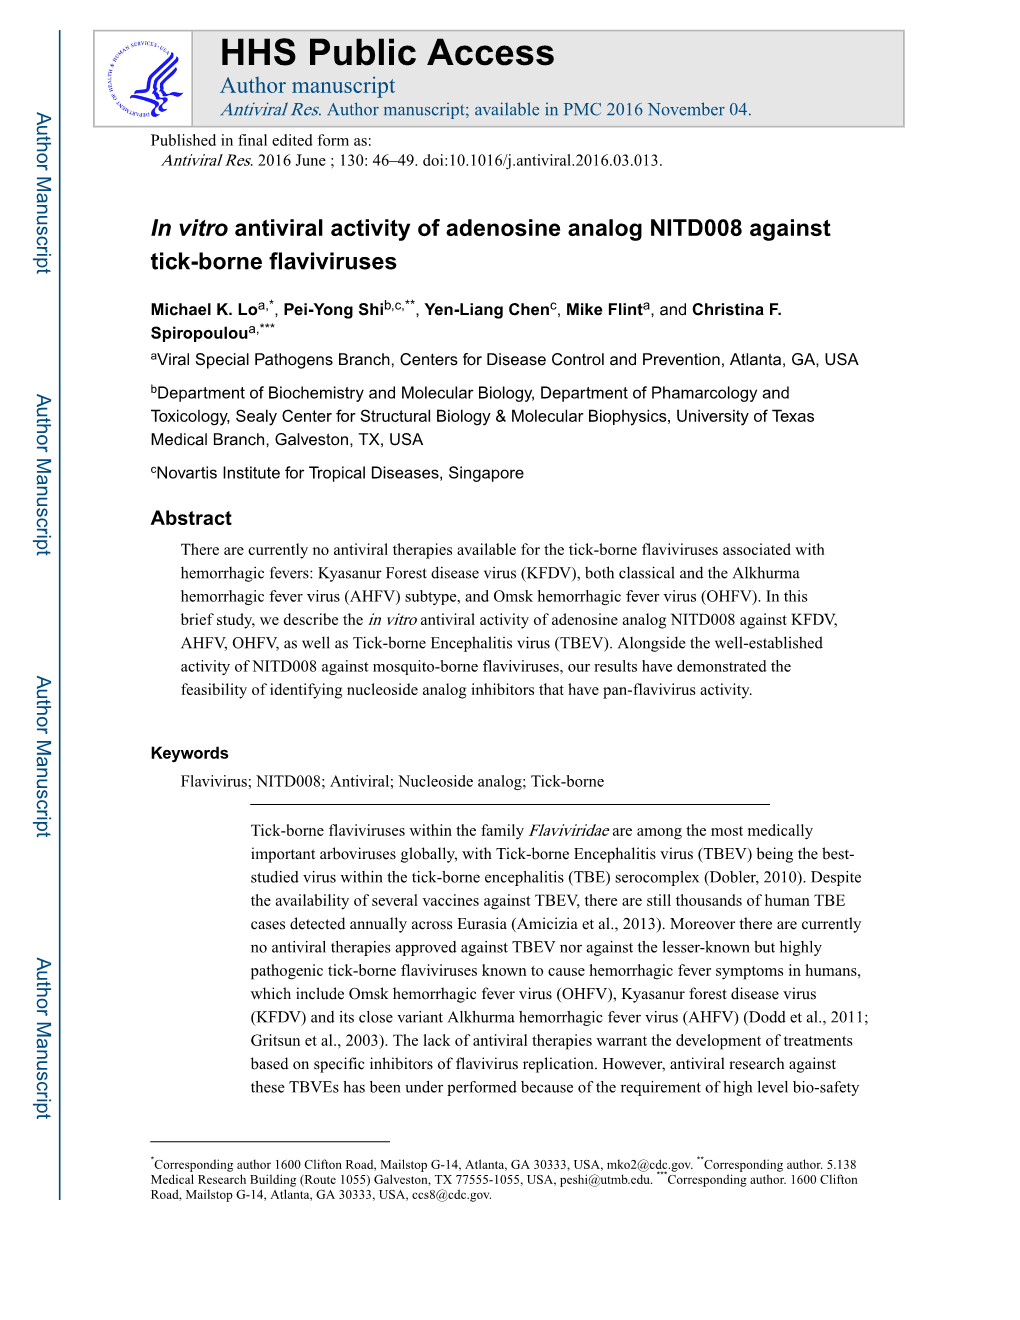 In Vitro Antiviral Activity of Adenosine Analog NITD008 Against Tick-Borne Flaviviruses